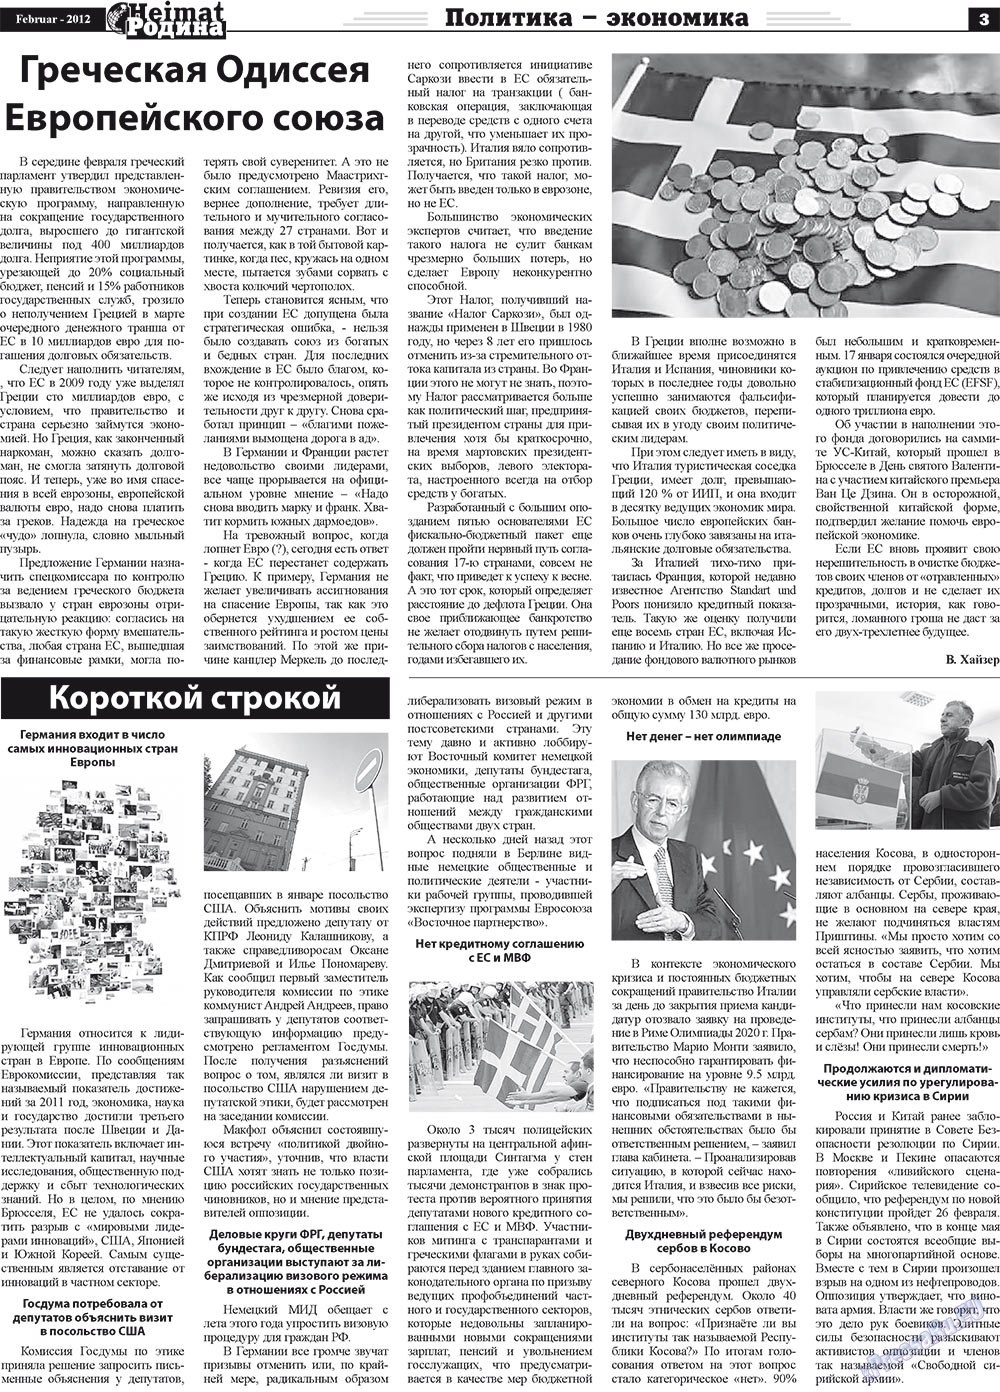 Heimat-Родина, газета. 2012 №2 стр.3